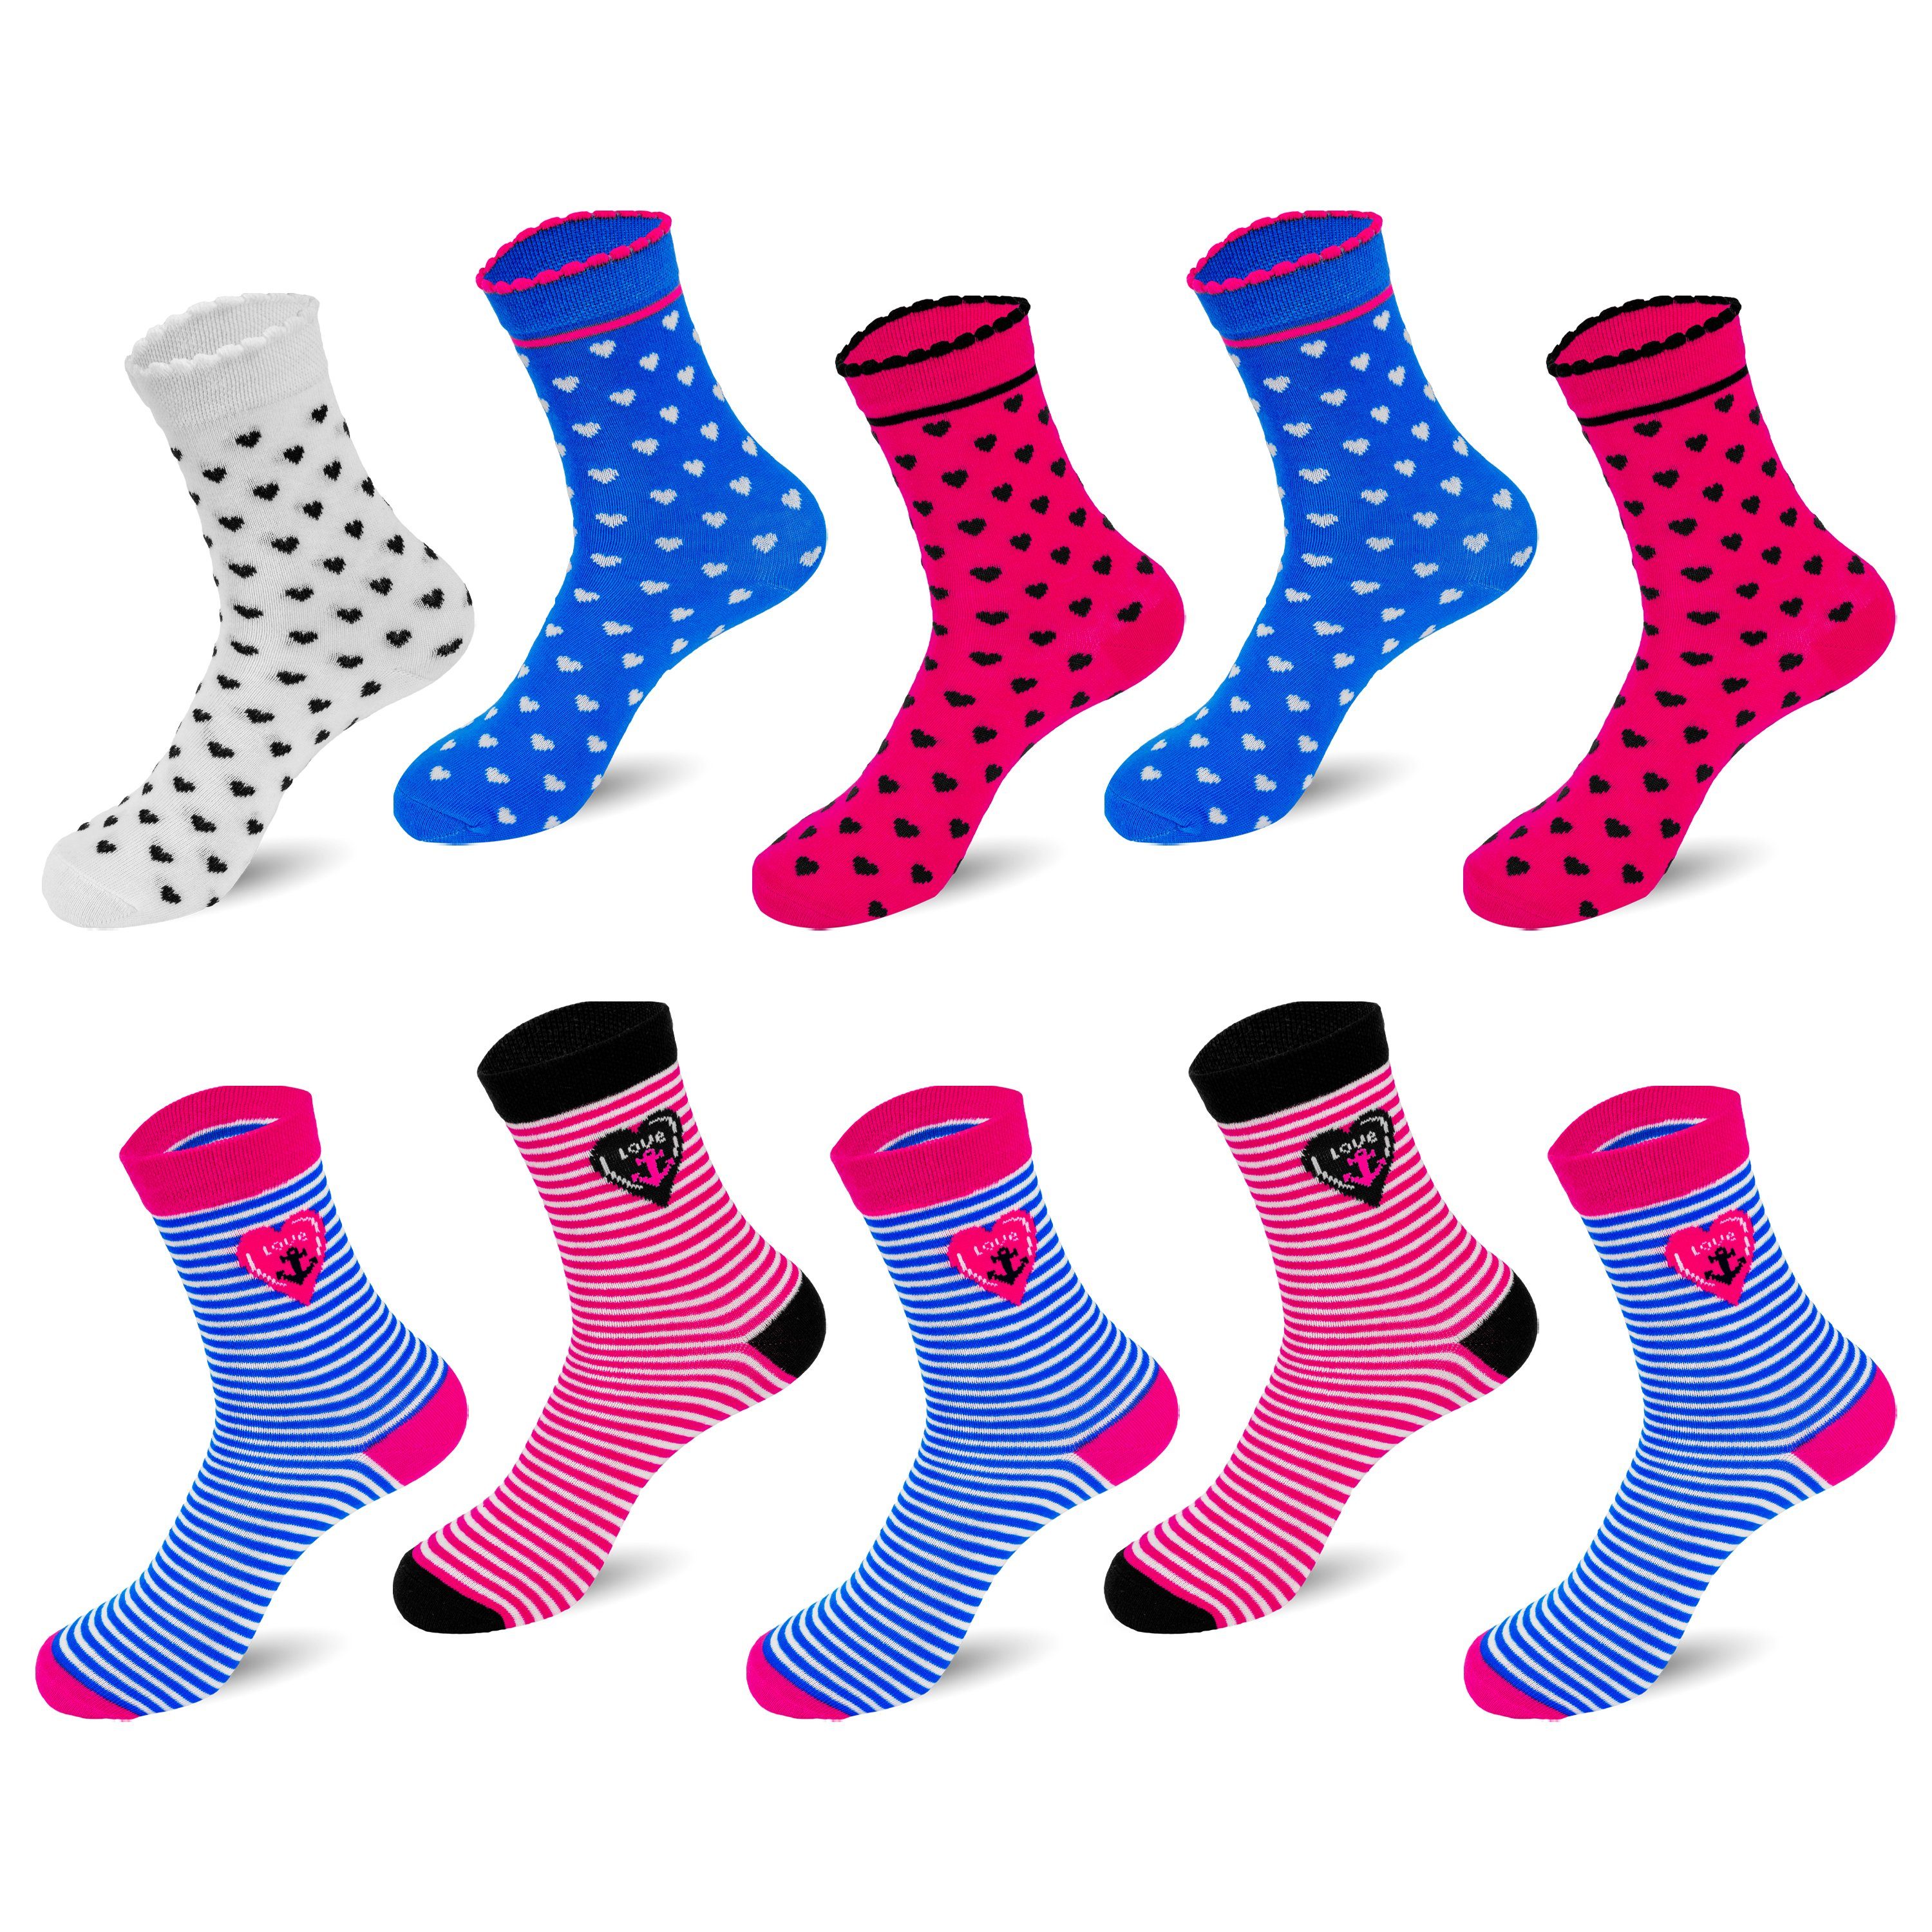 TEXEMP Socken 10 Paar Kinder Socken Mädchen & Jungen Baumwolle Kindersocken Strümpfe (Packung, 10-Paar) Langlebig & Robust